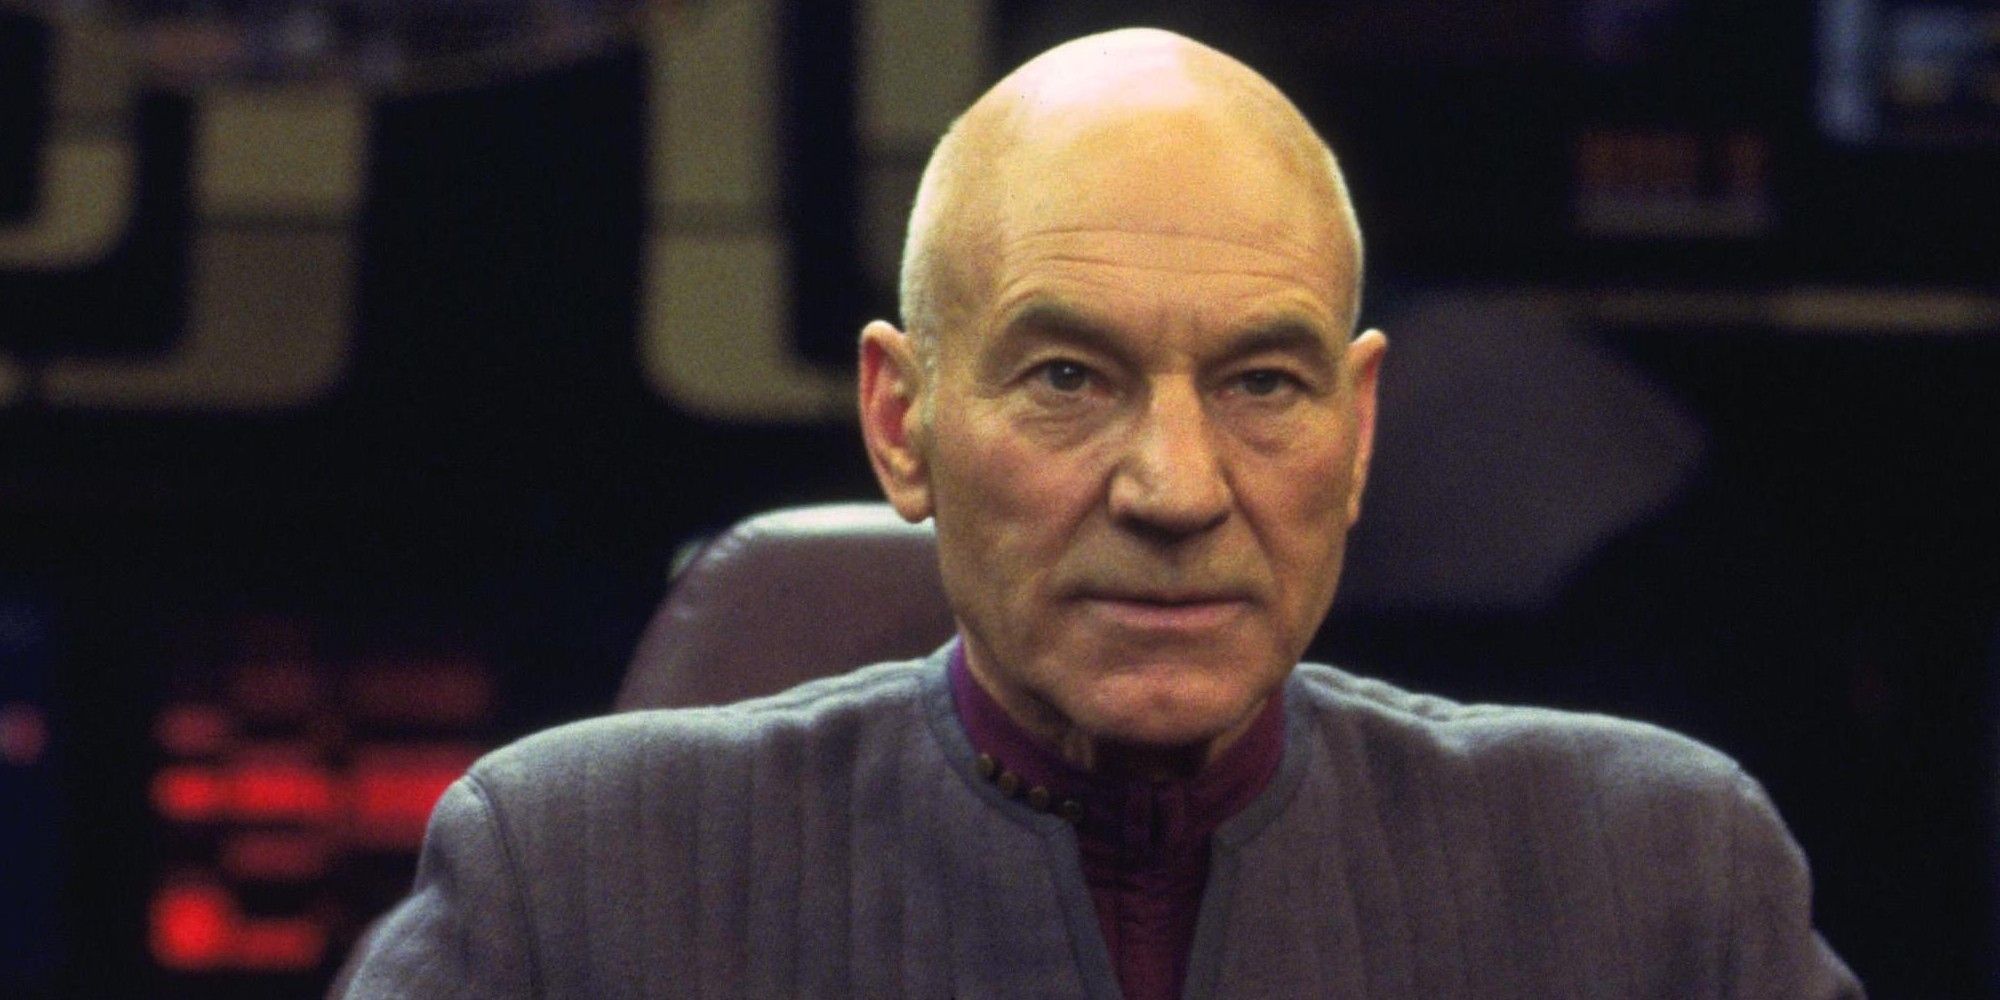 Patrick-Stewart-as-Jean-Luc-Picard-in-Star-Trek